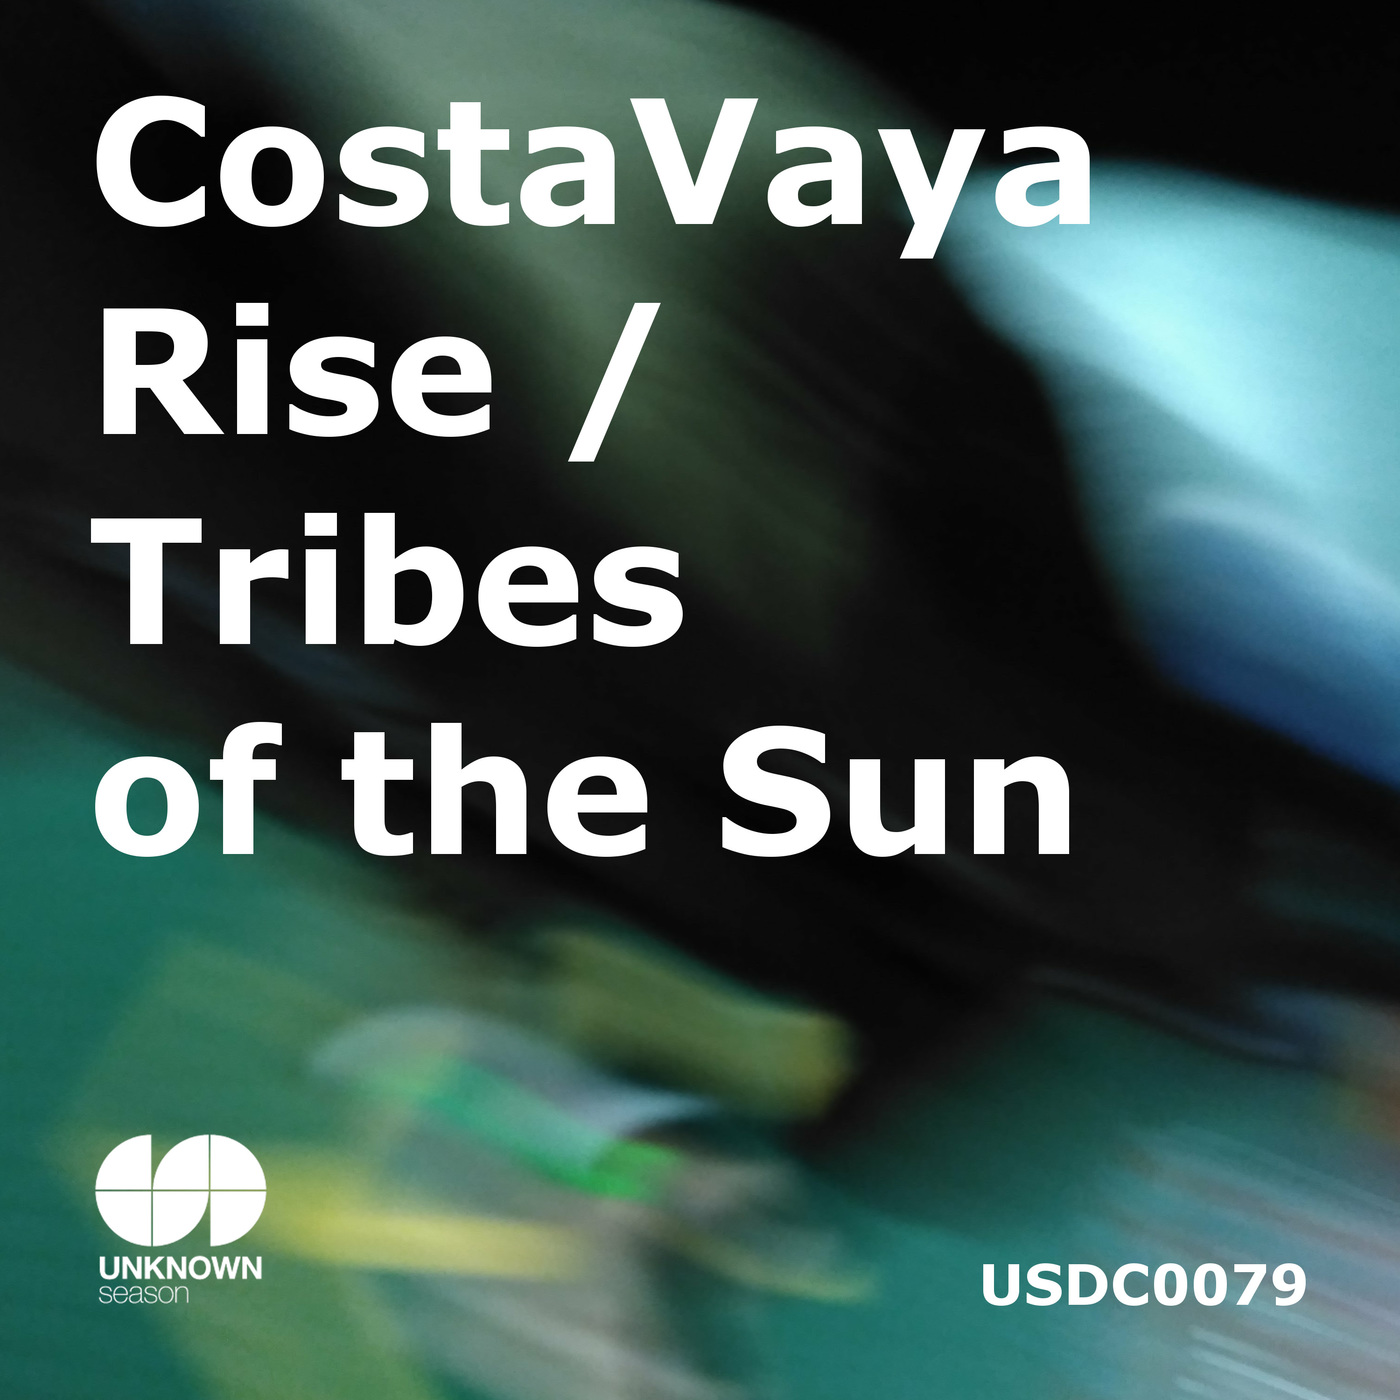 Costa Vaya - Rise / Tribes of the Sun / UNKNOWN season